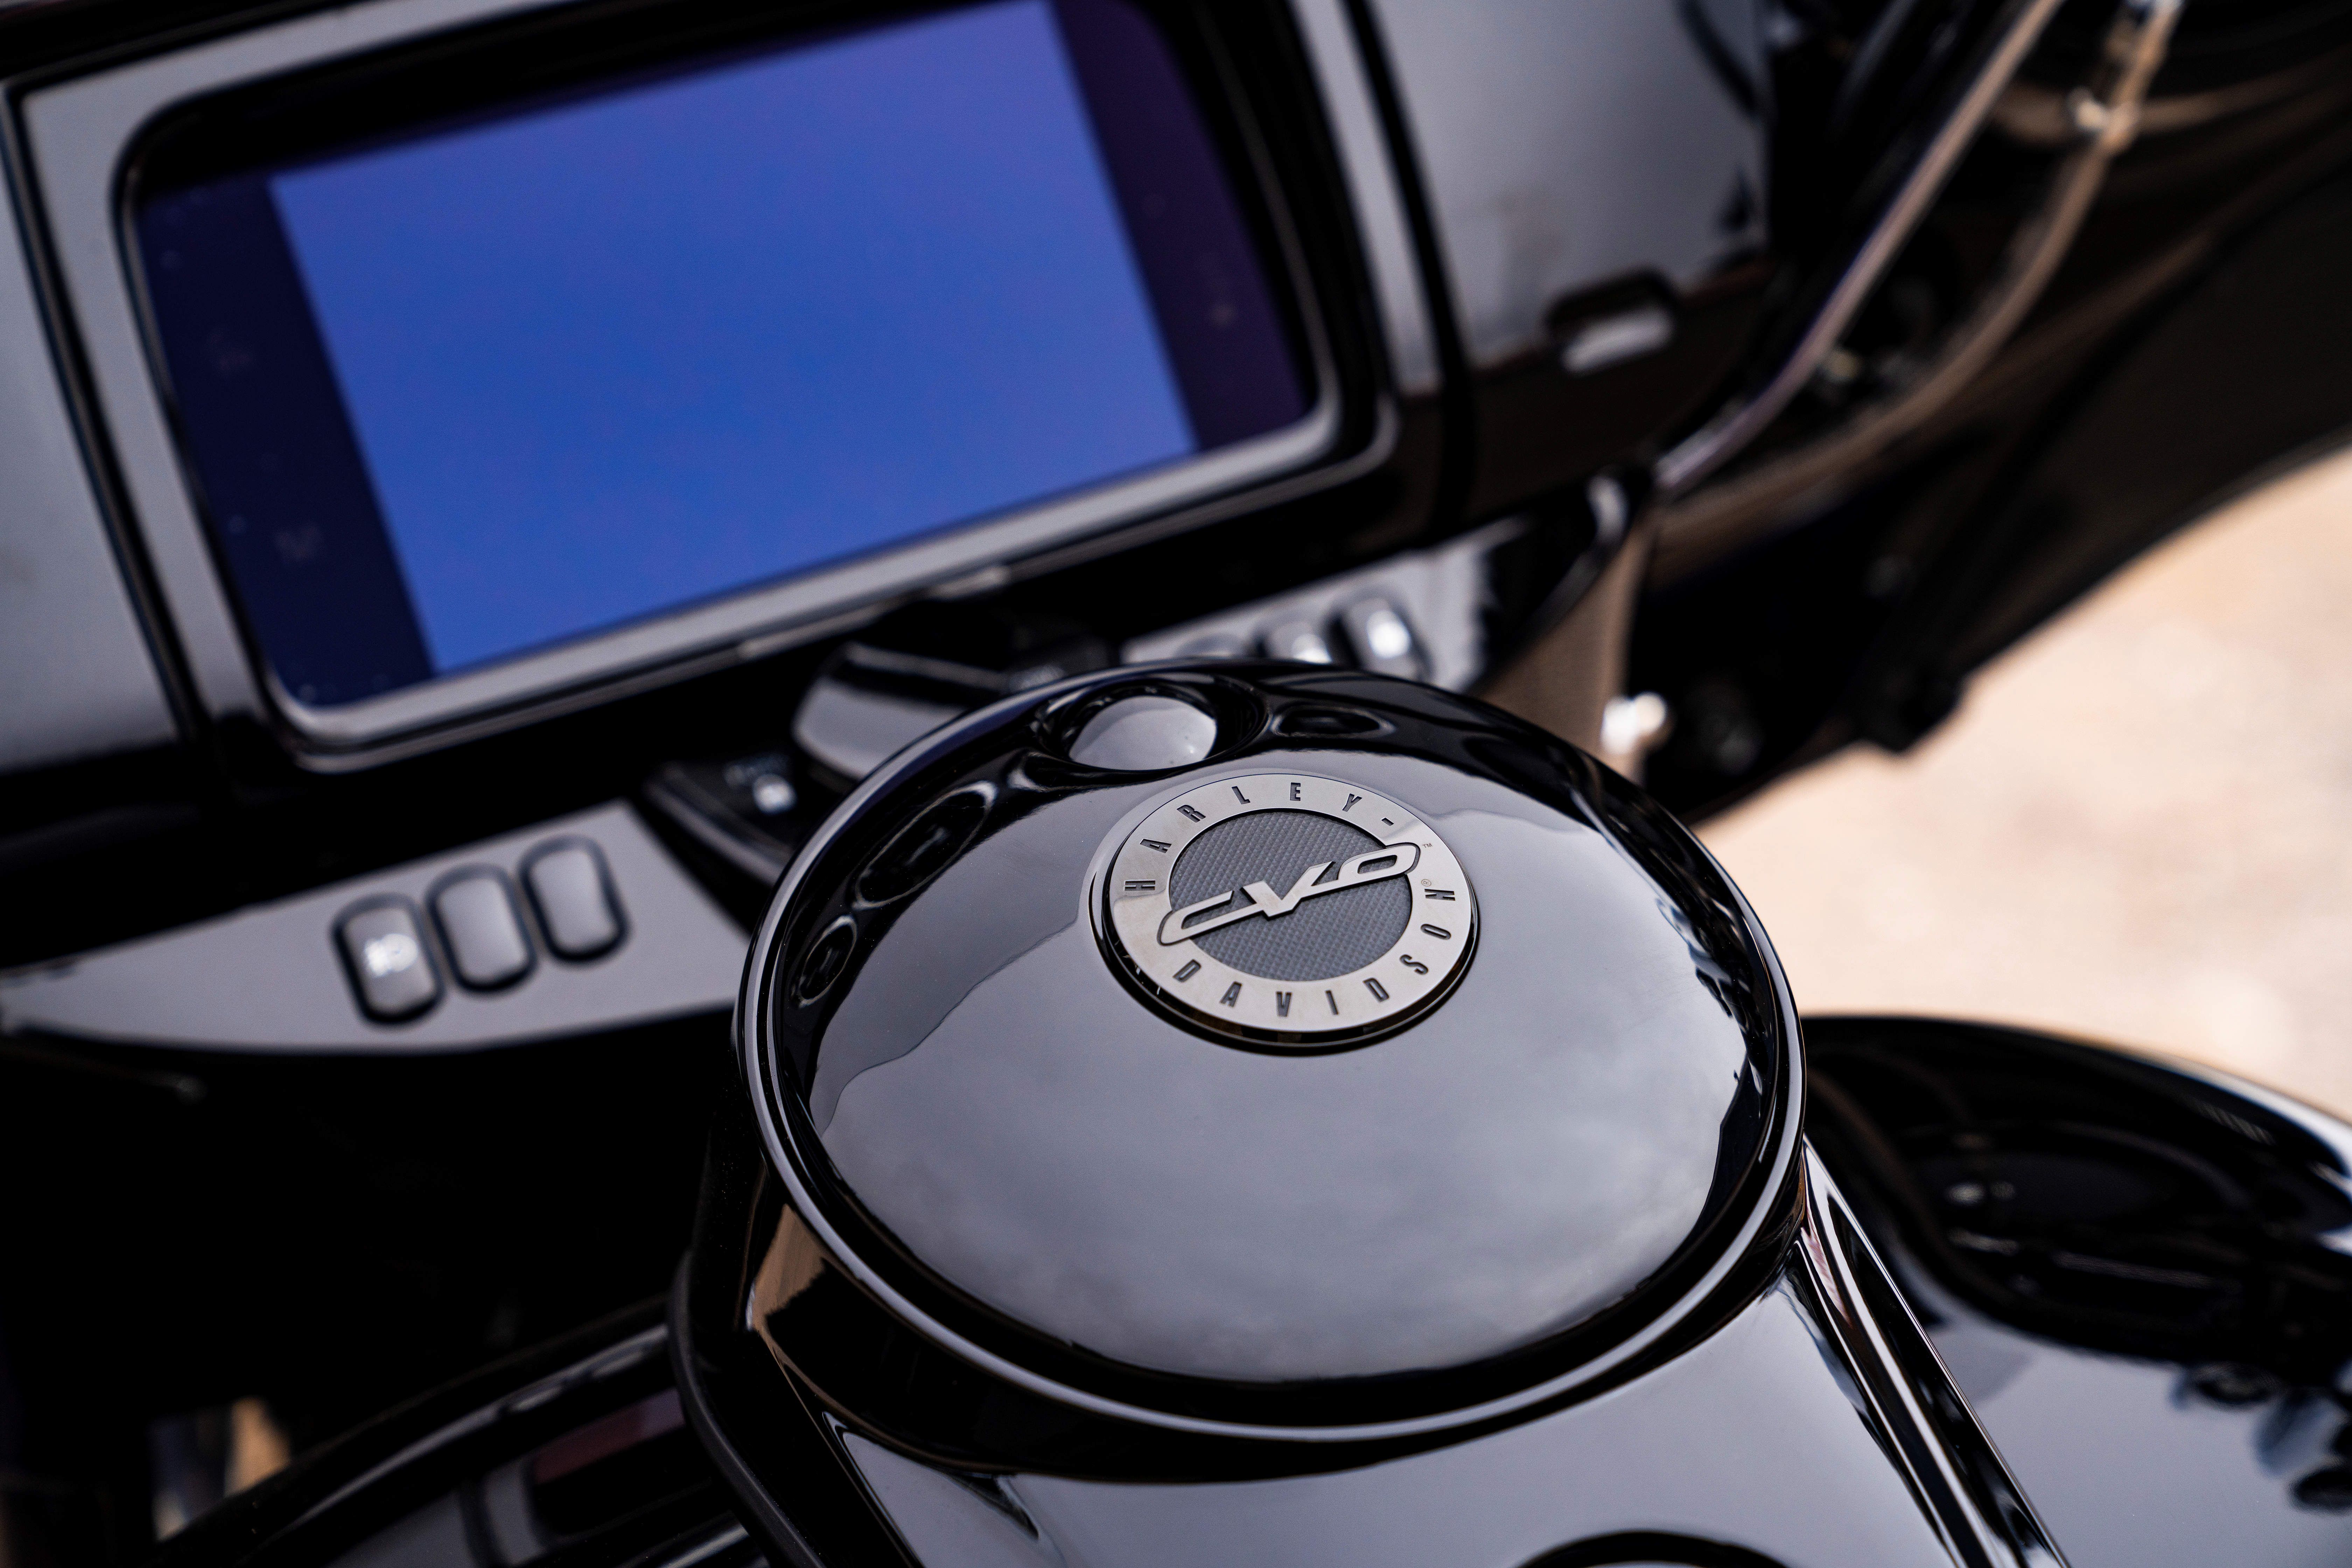 2019 Harley-Davidson CVO Limited